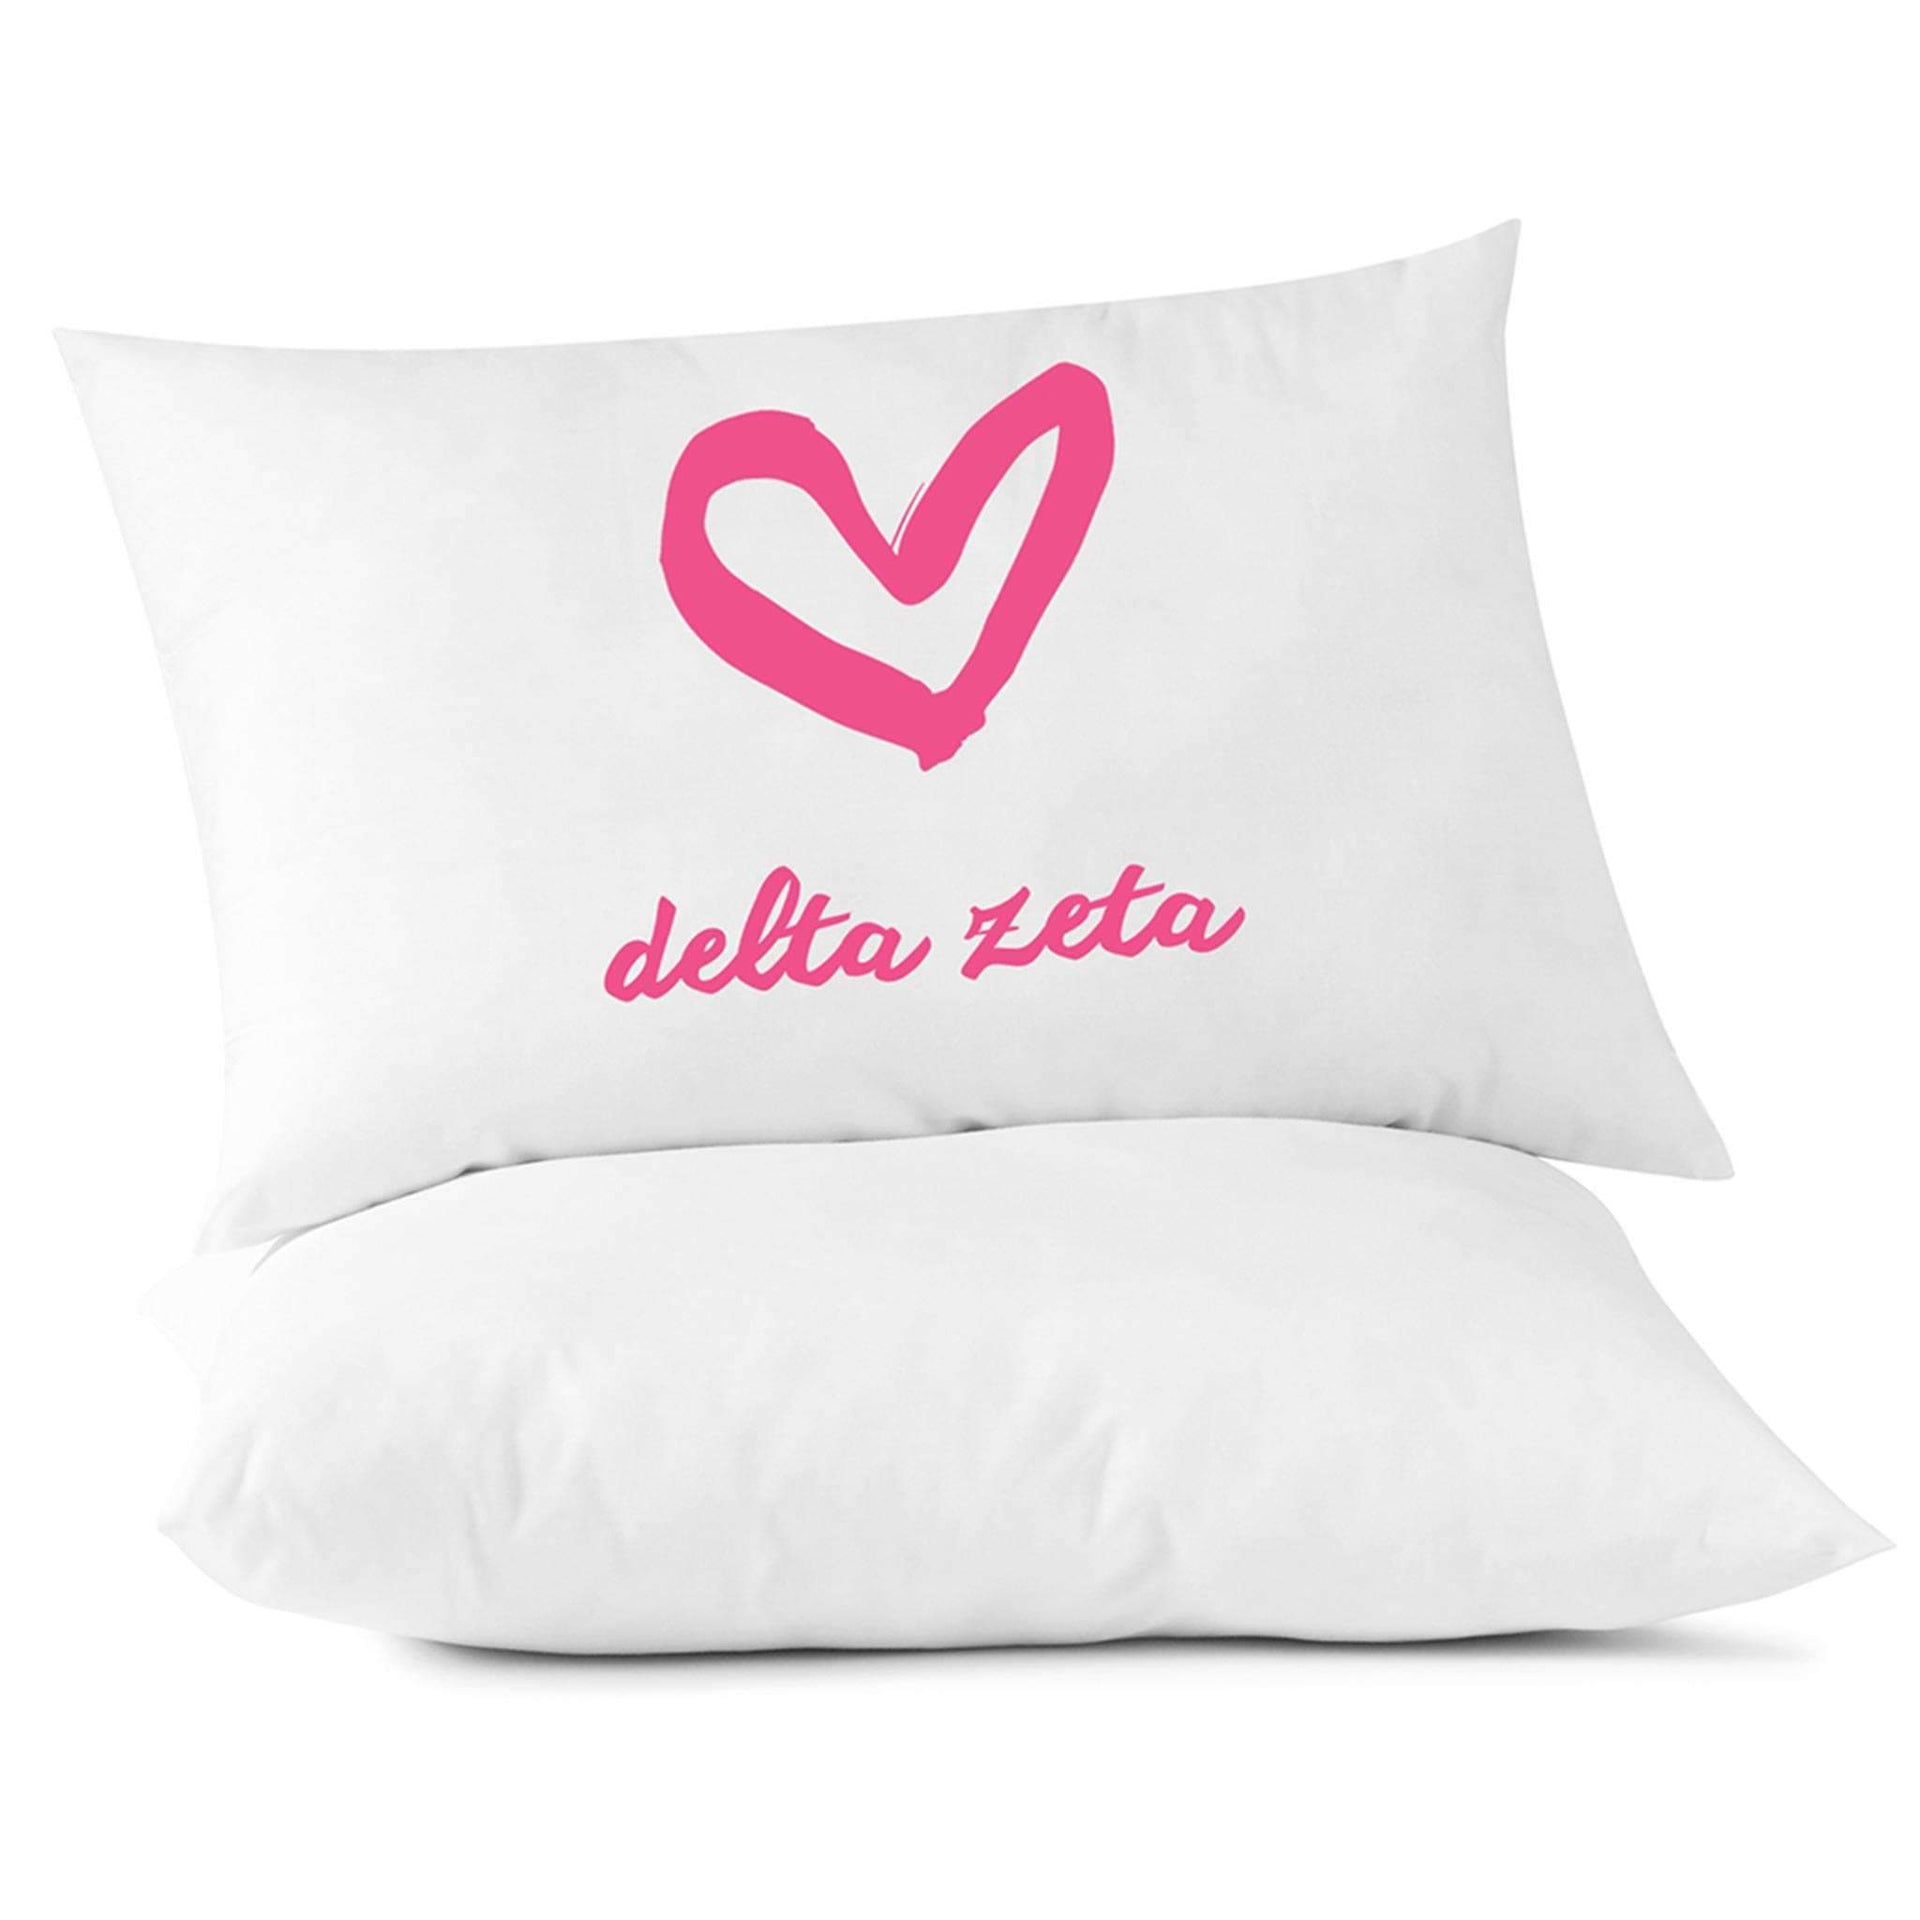 Delta Zeta sorority name with heart design custom printed on pillowcase.